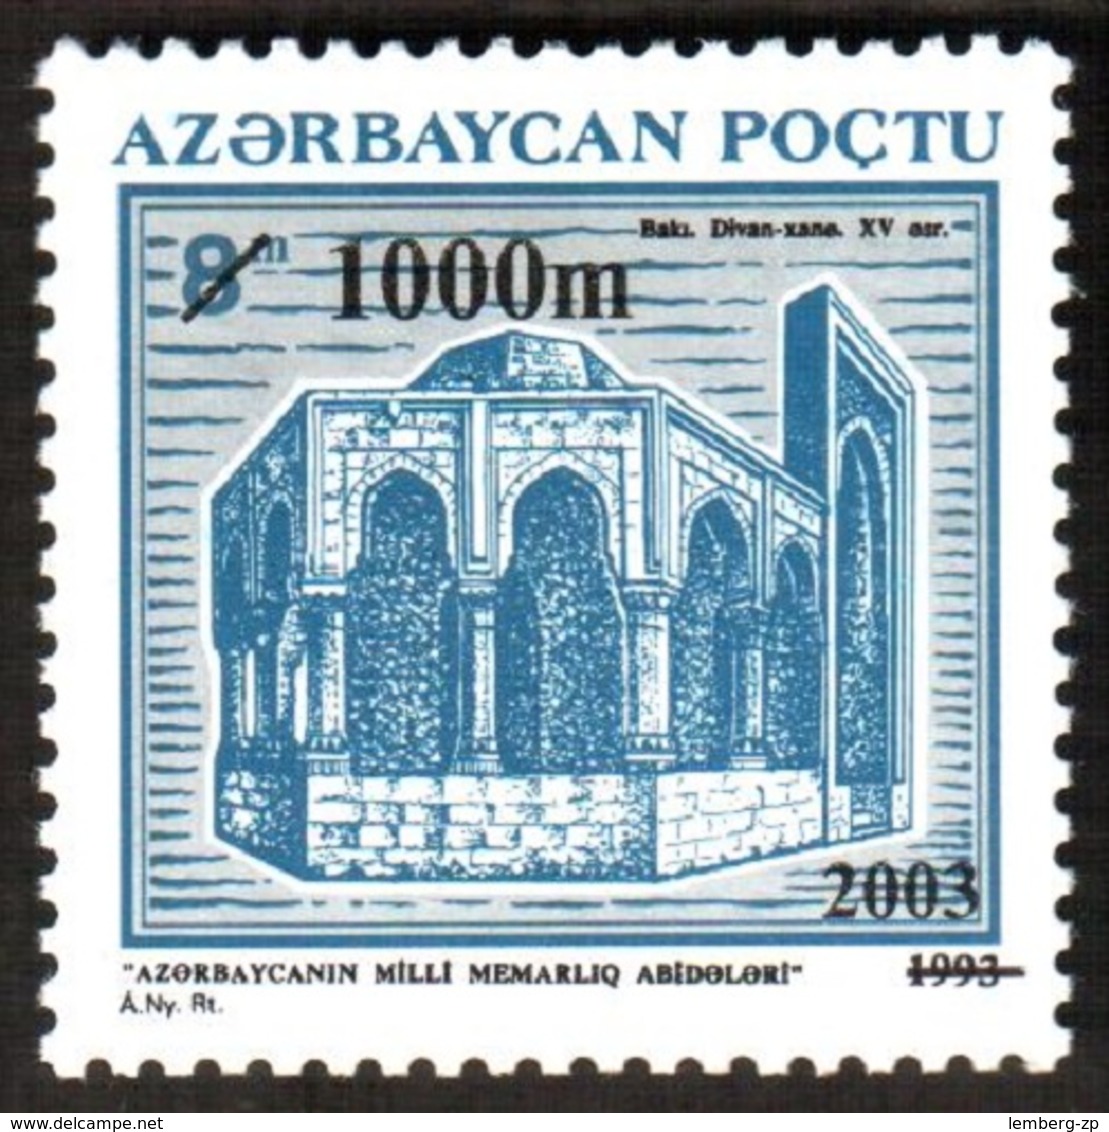 135 - Azerbaijan - 2003 - Architecture Of Baku - 1v - Lemberg-Zp - Aserbaidschan